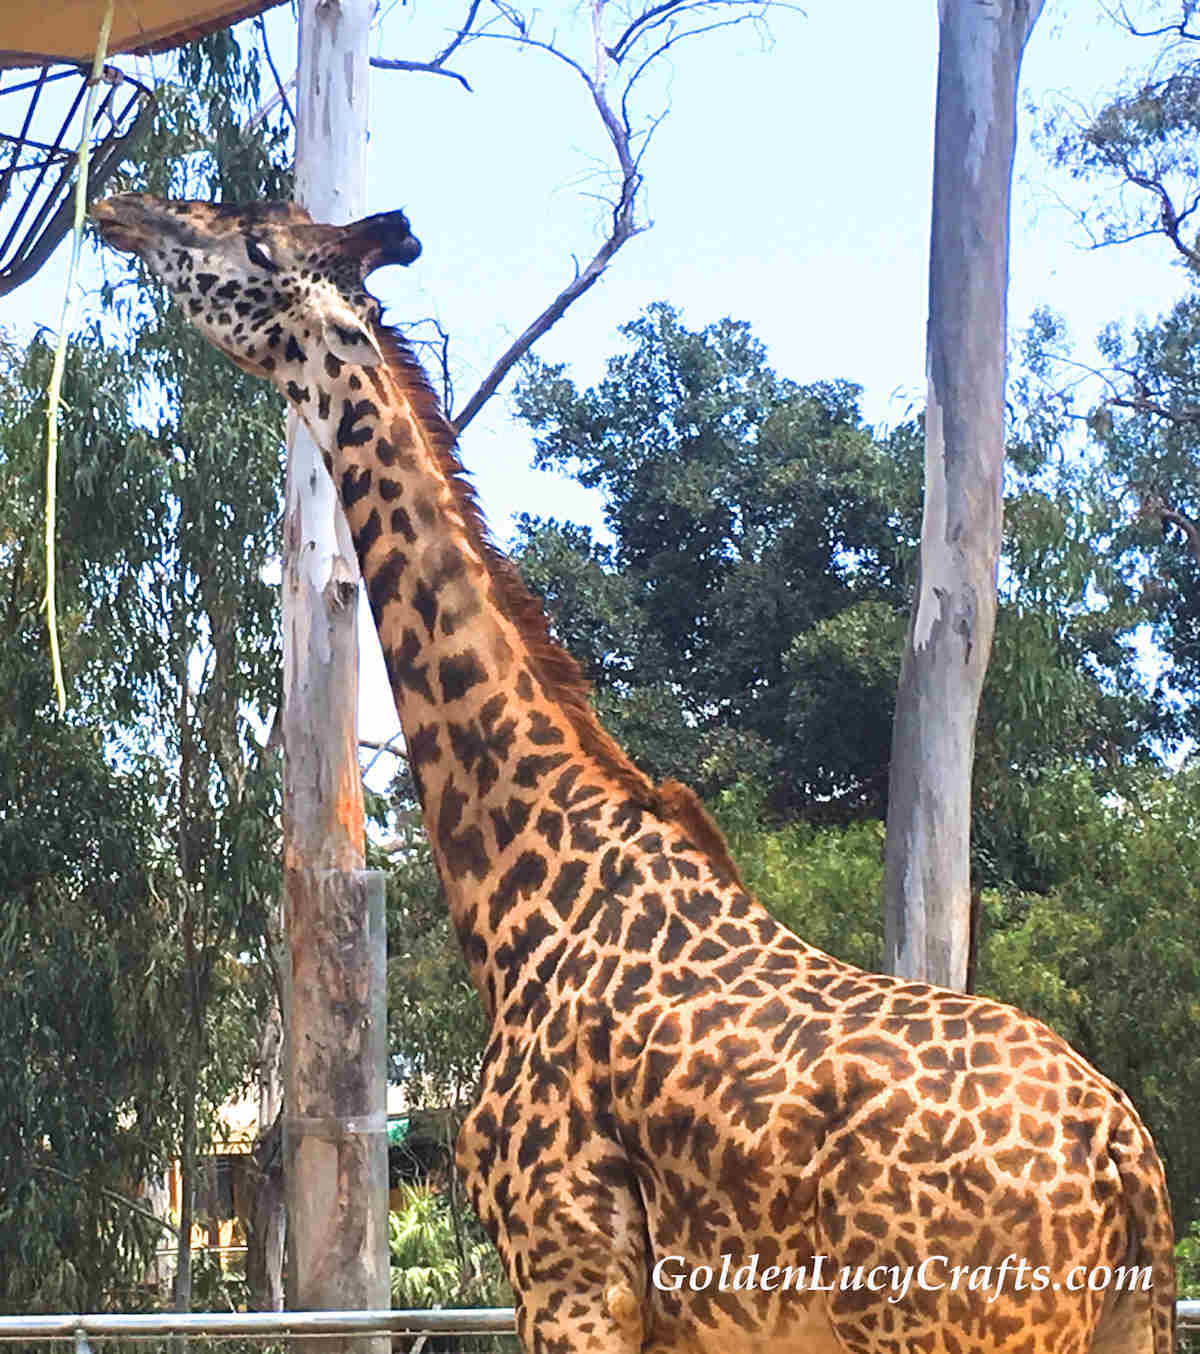 Giraffe eating his food.